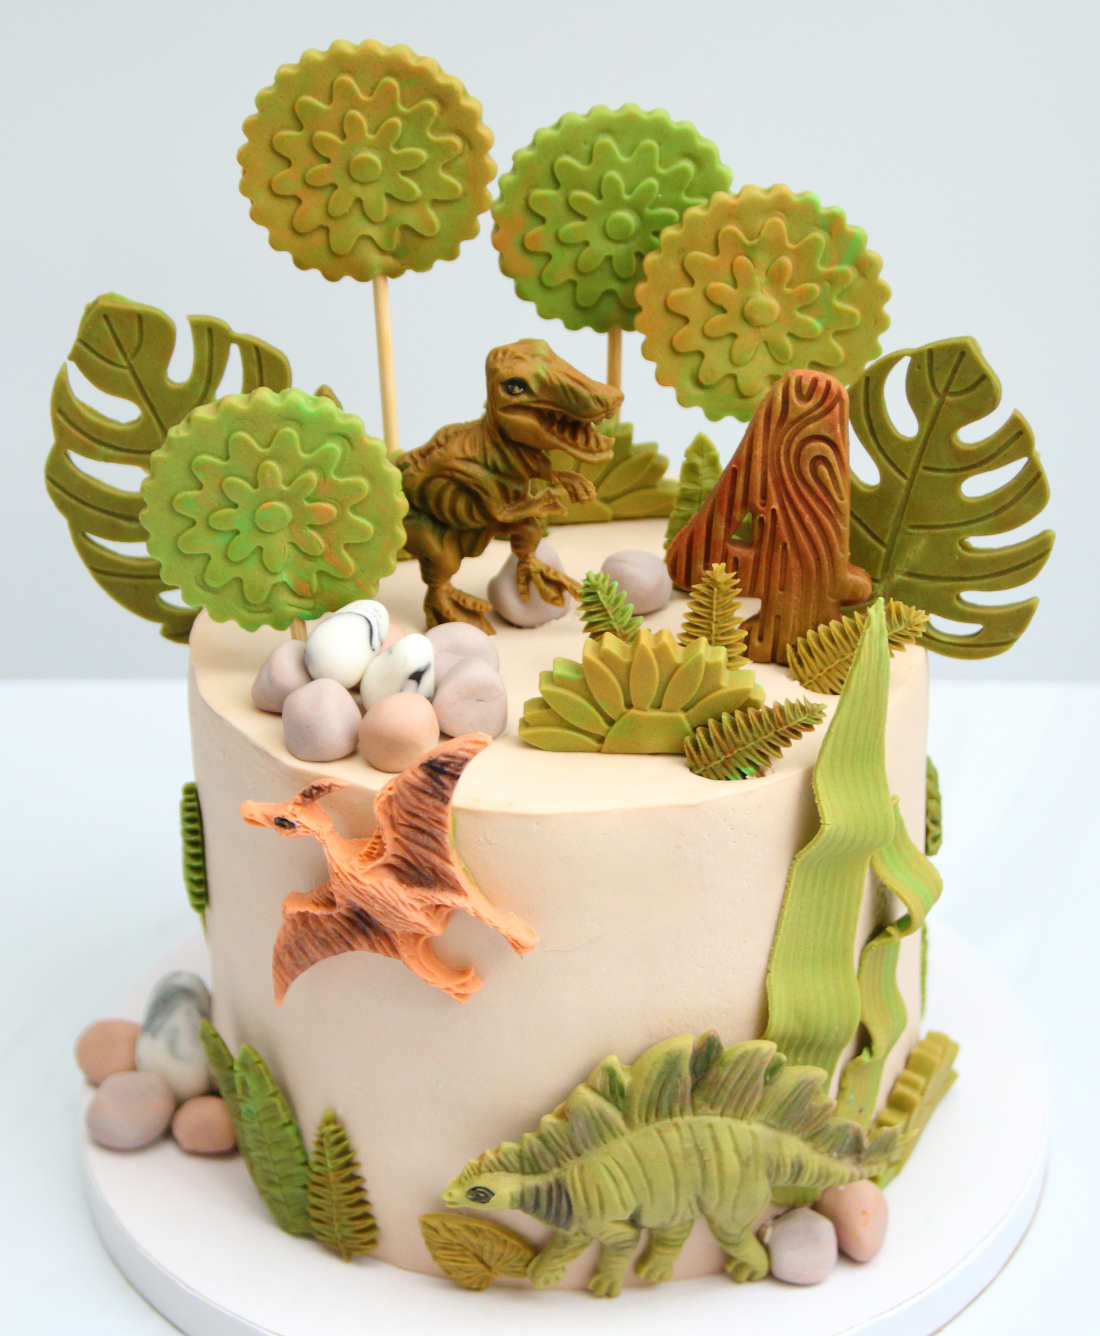 Dinosaur figures on a birthday cake